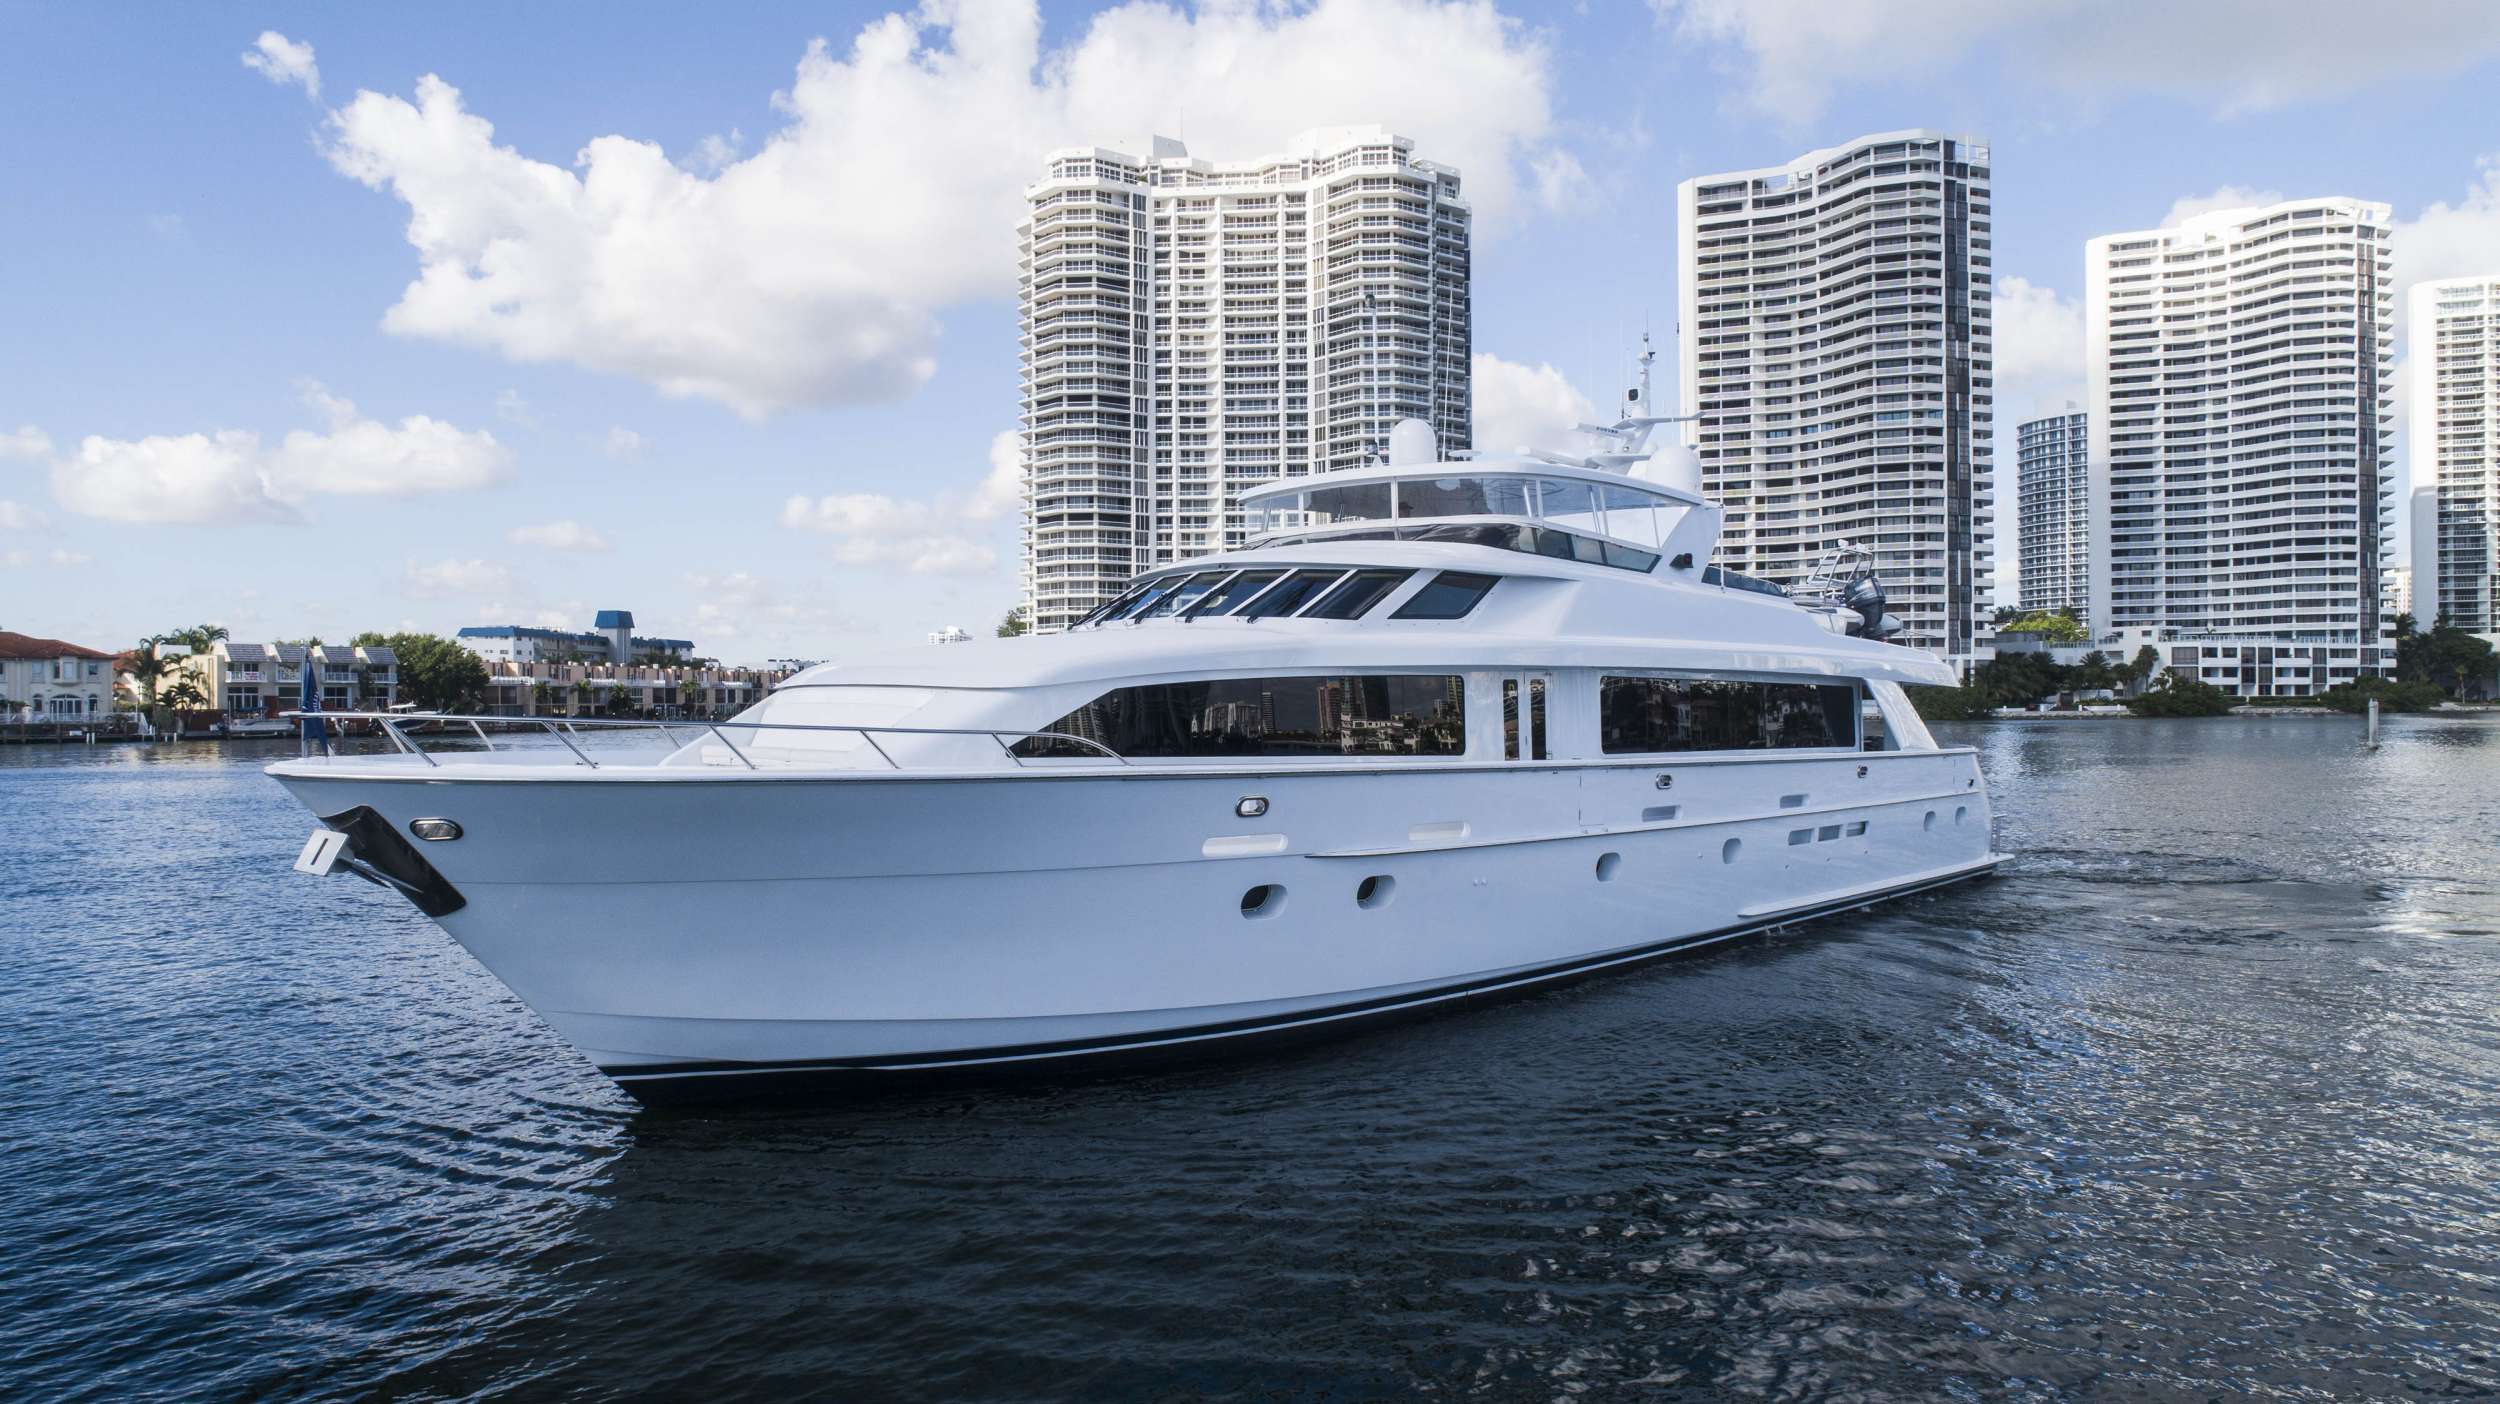 INEVITABLE - Yacht Charter USA & Boat hire in US East Coast & Bahamas 1